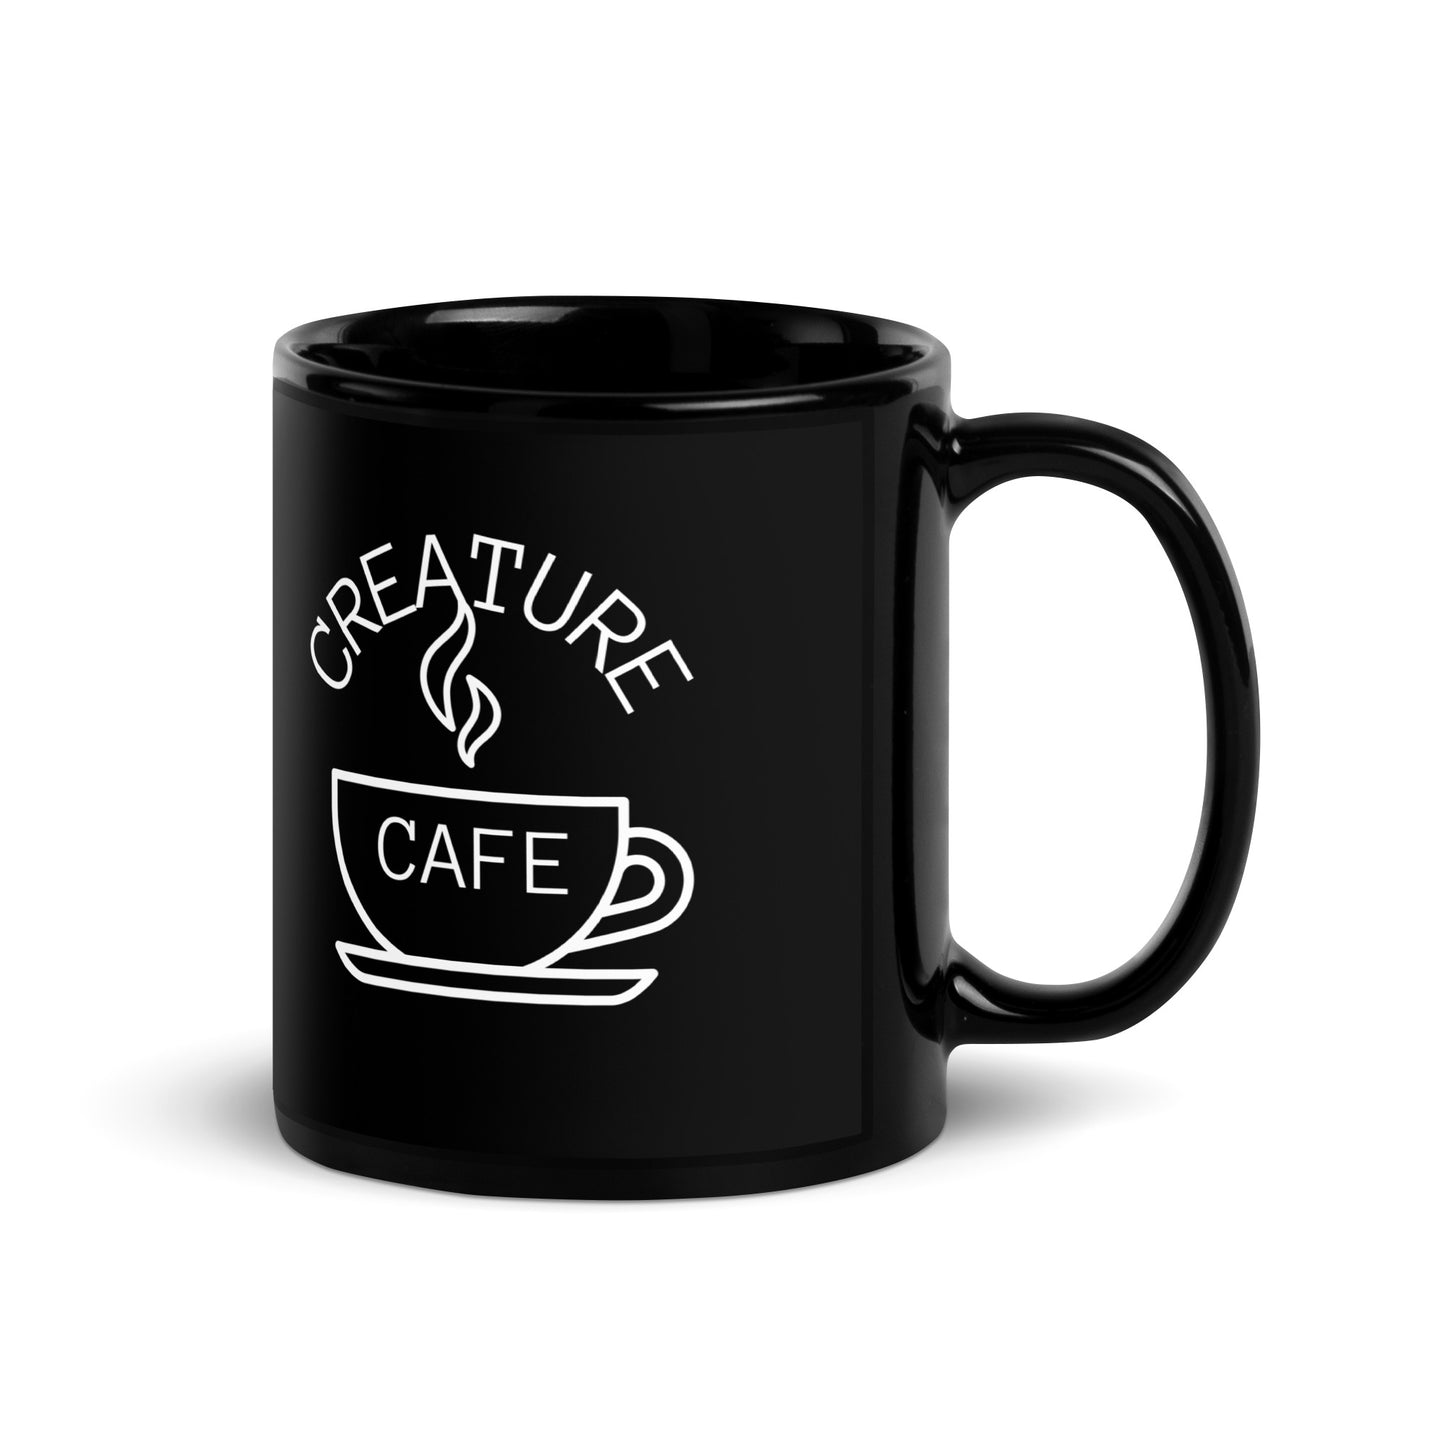 Creature Cafe Mug